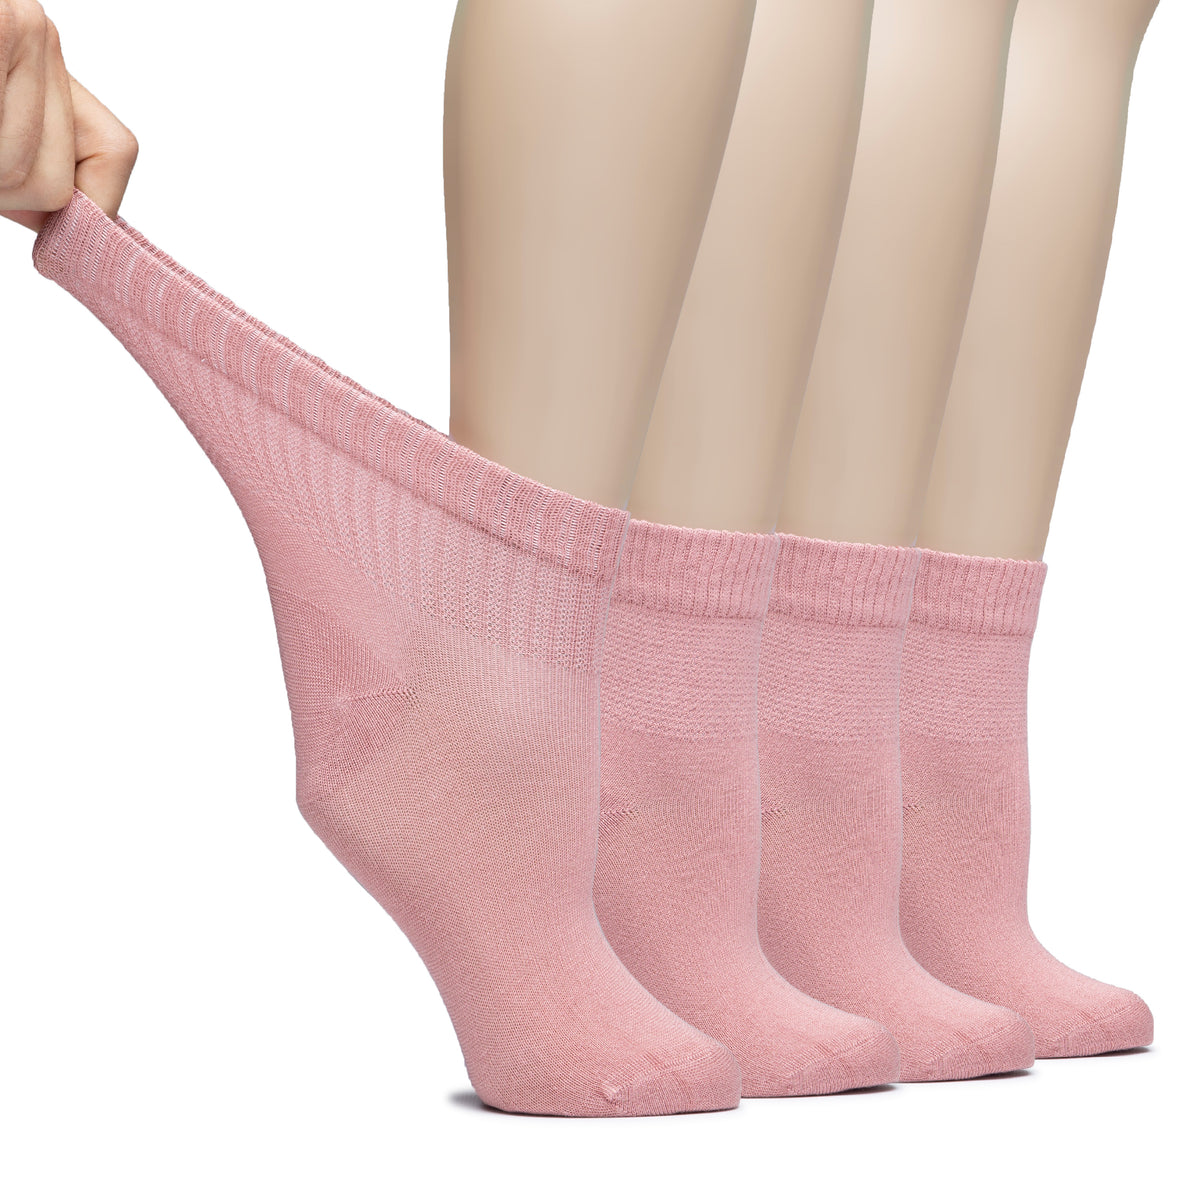 Hugh Ugoli Lightweight Women's Diabetic Ankle Socks Bamboo Thin Socks Seamless Toe and Non-Binding Top, 4 Pairs, , Shoe Size: 6-9/10-12 | Shoe Size: 10-12 | Rose Cloud